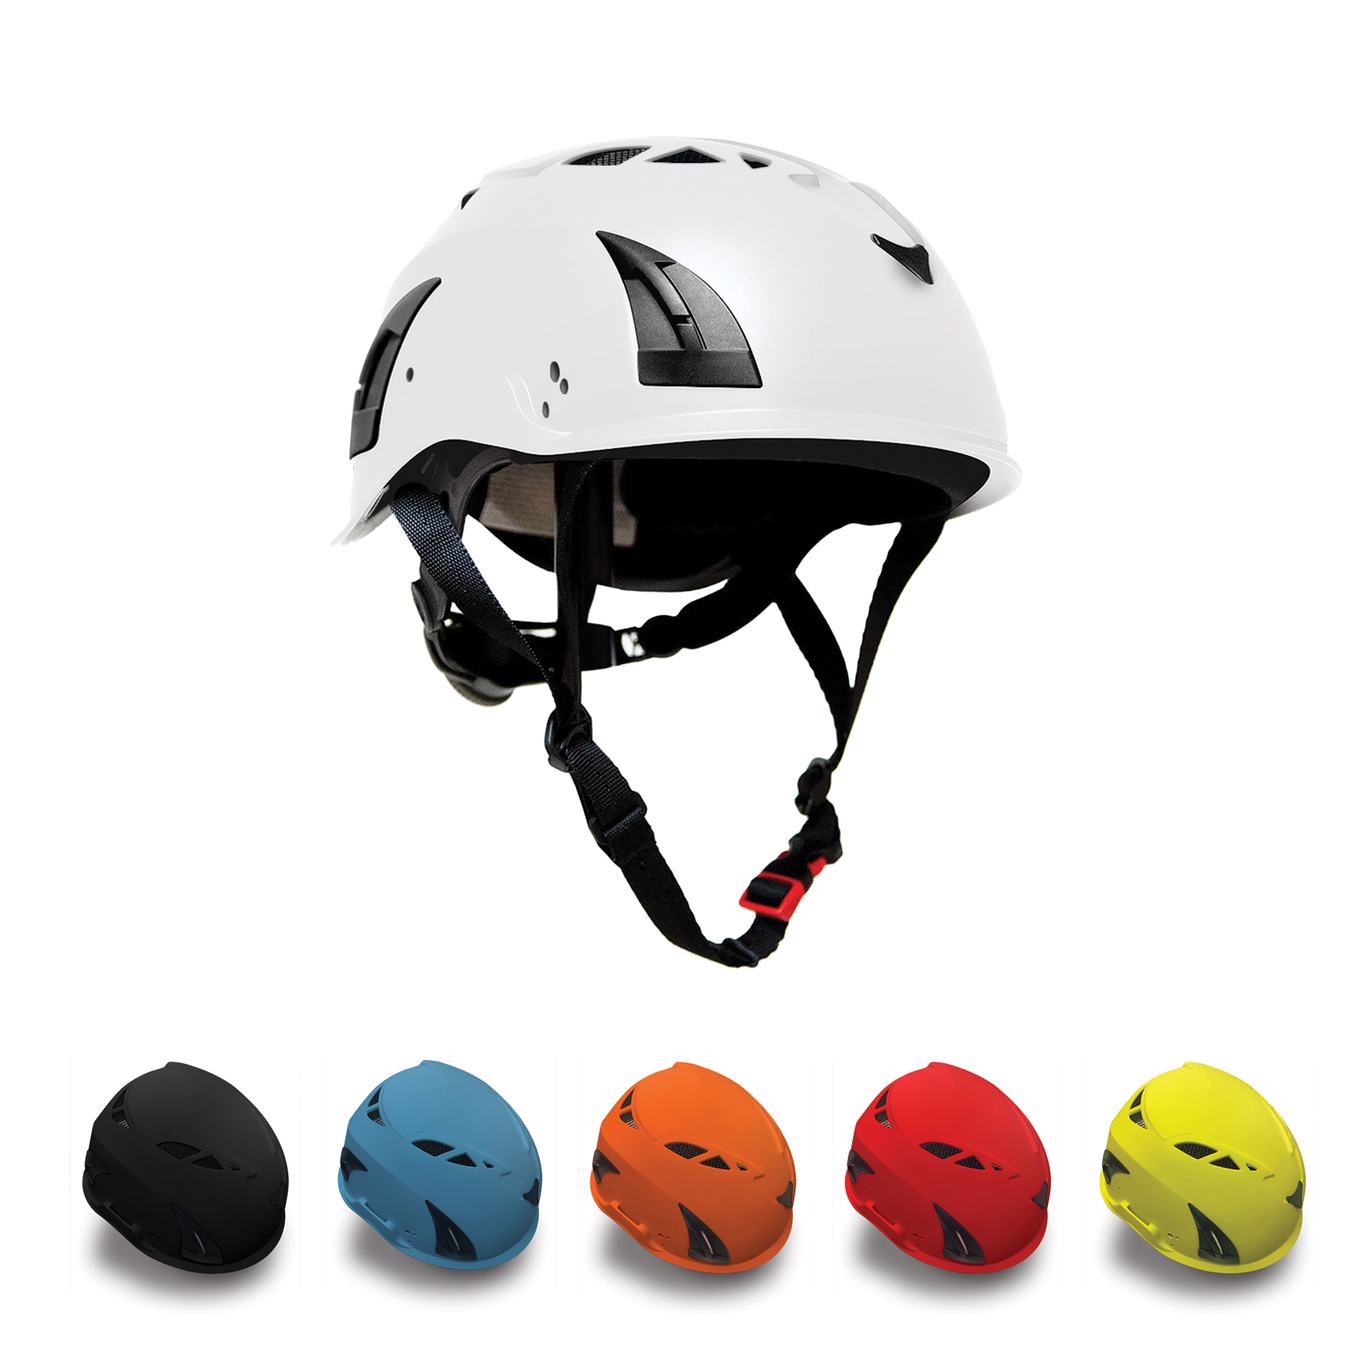 Head protection | helmets